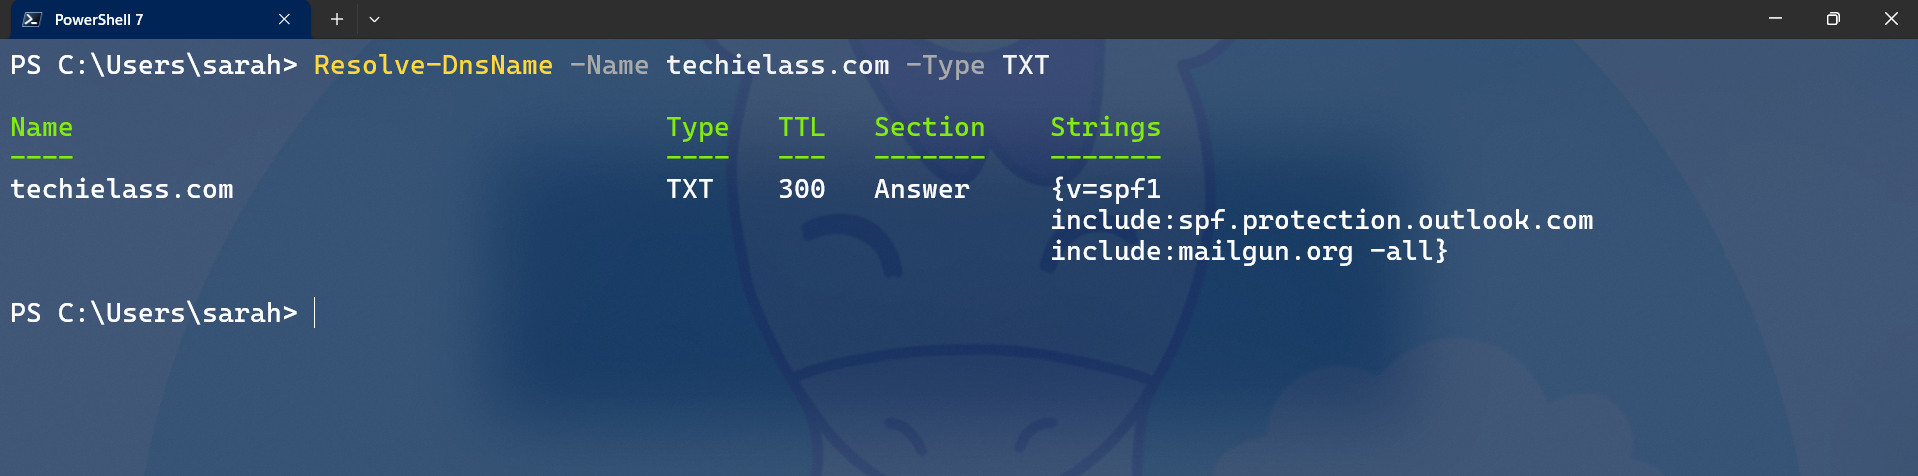 PowerShell TXT DNS record query